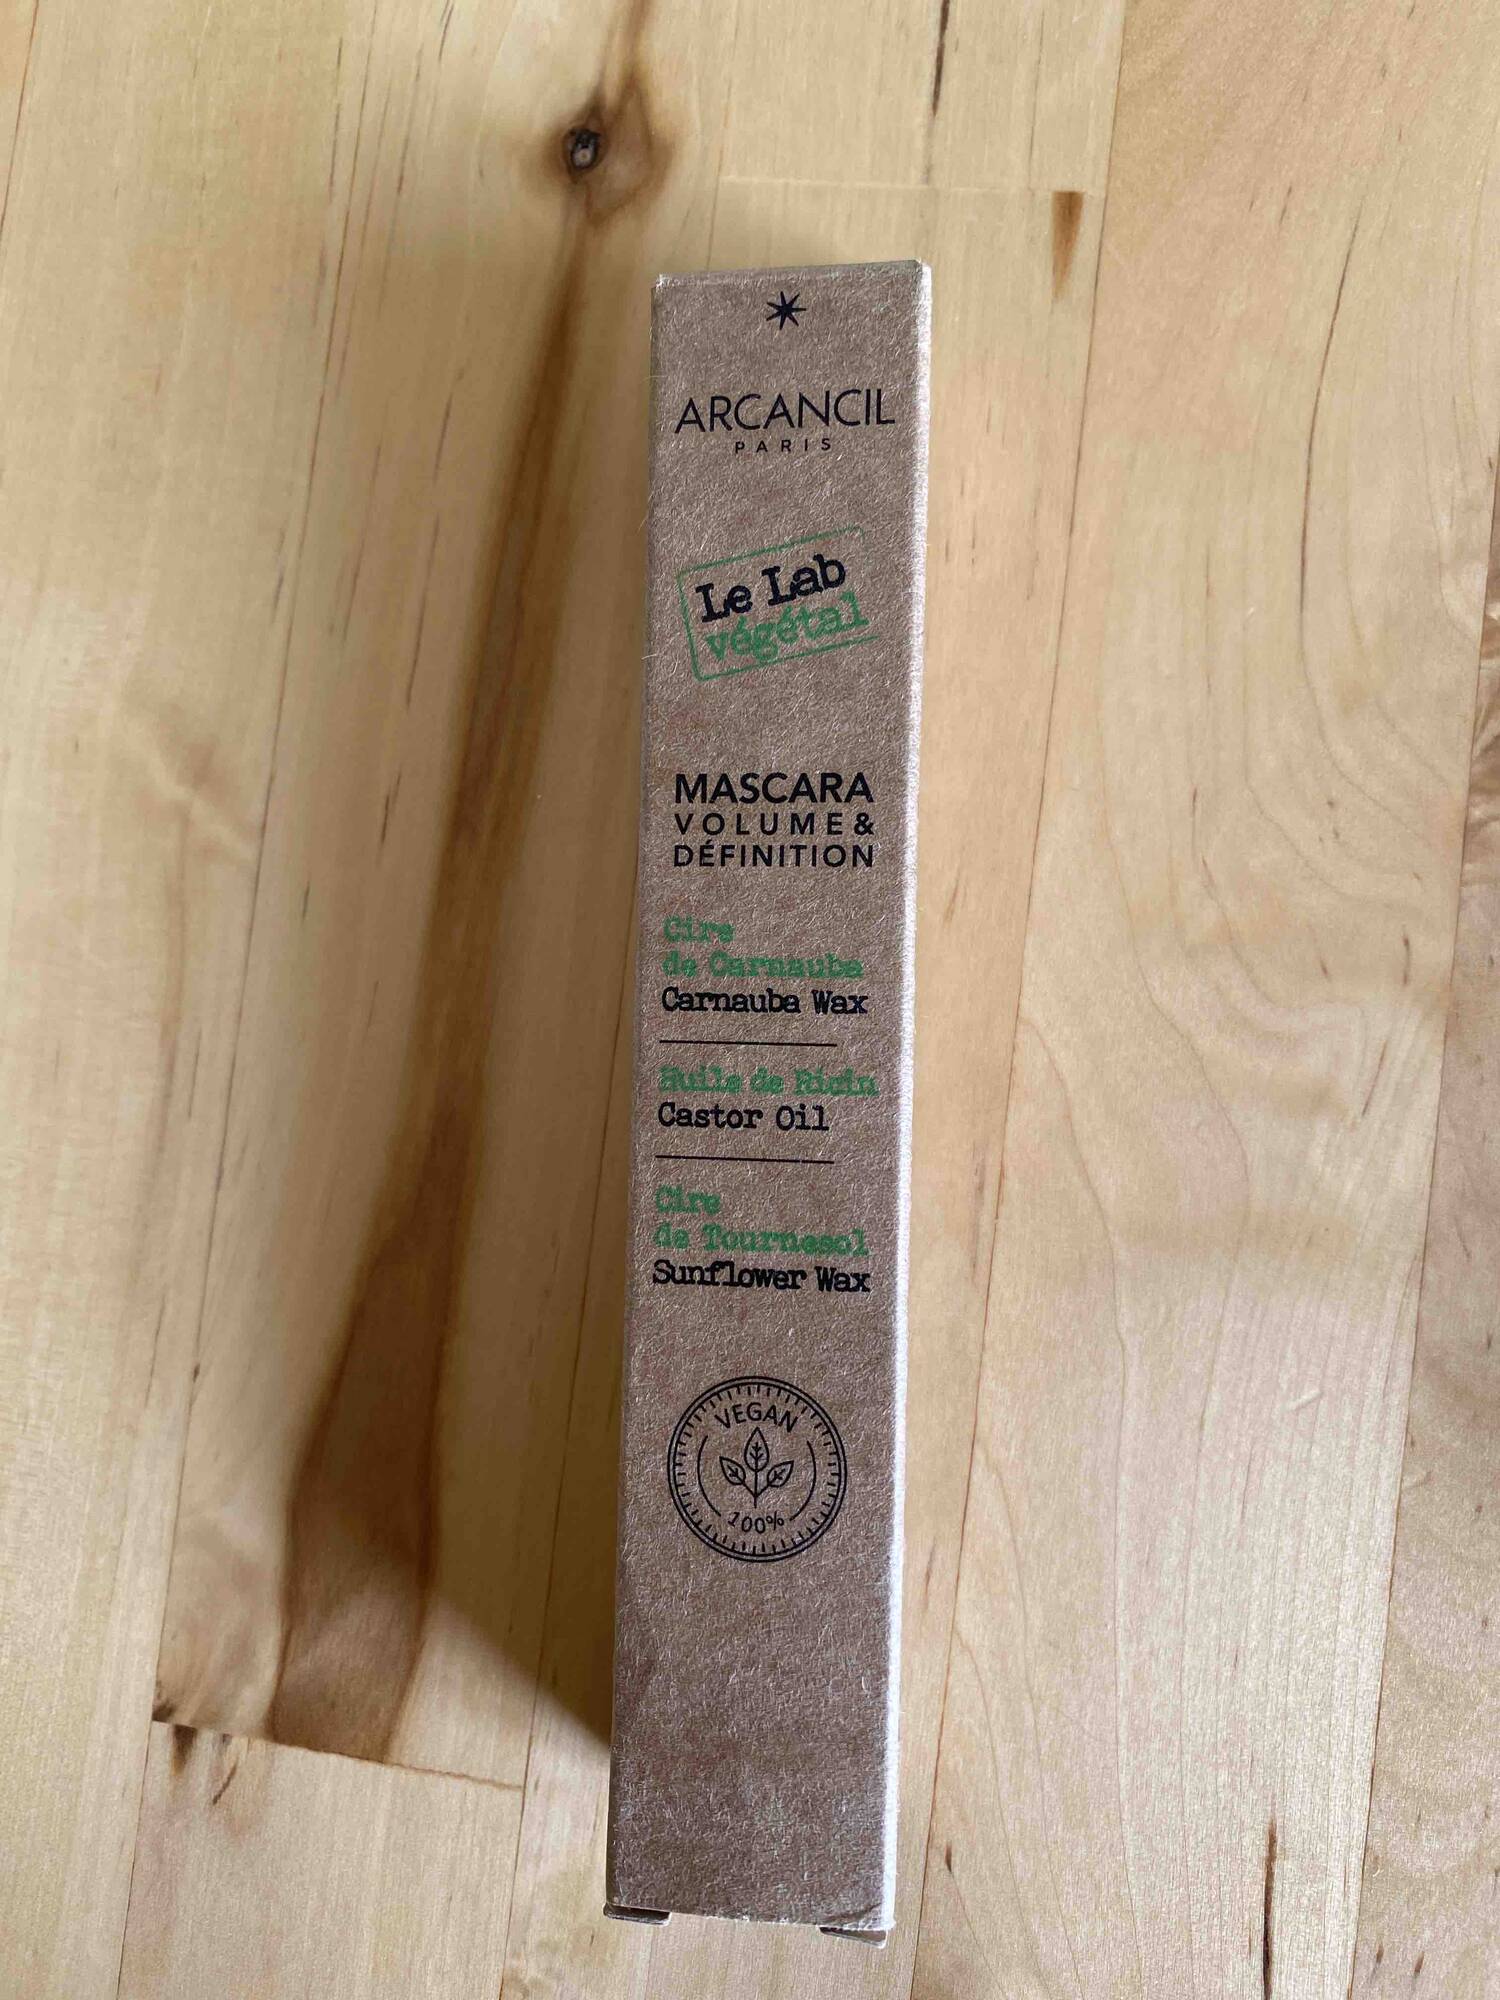 ARCANCIL - Le lab végétal - Mascara Volume & Définition